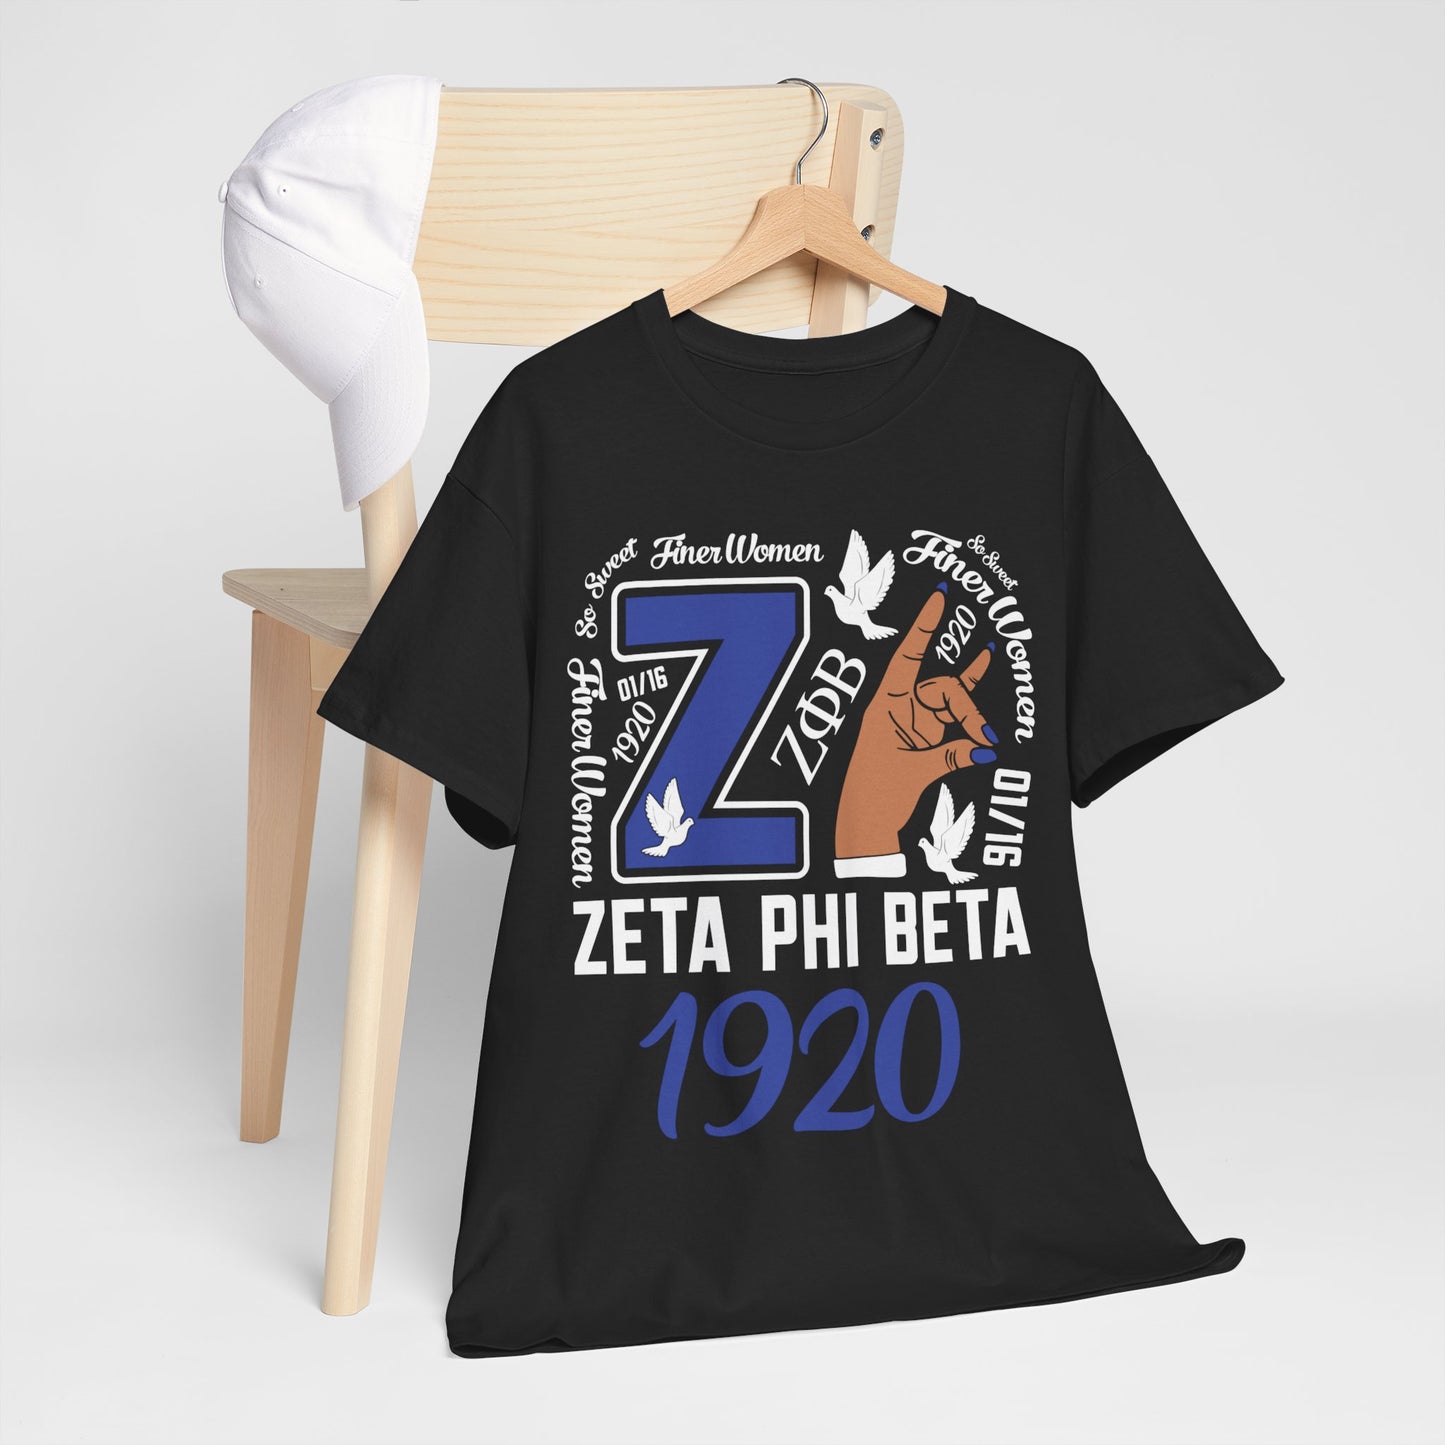 1920 Zeta Phi Beta T-Shirt